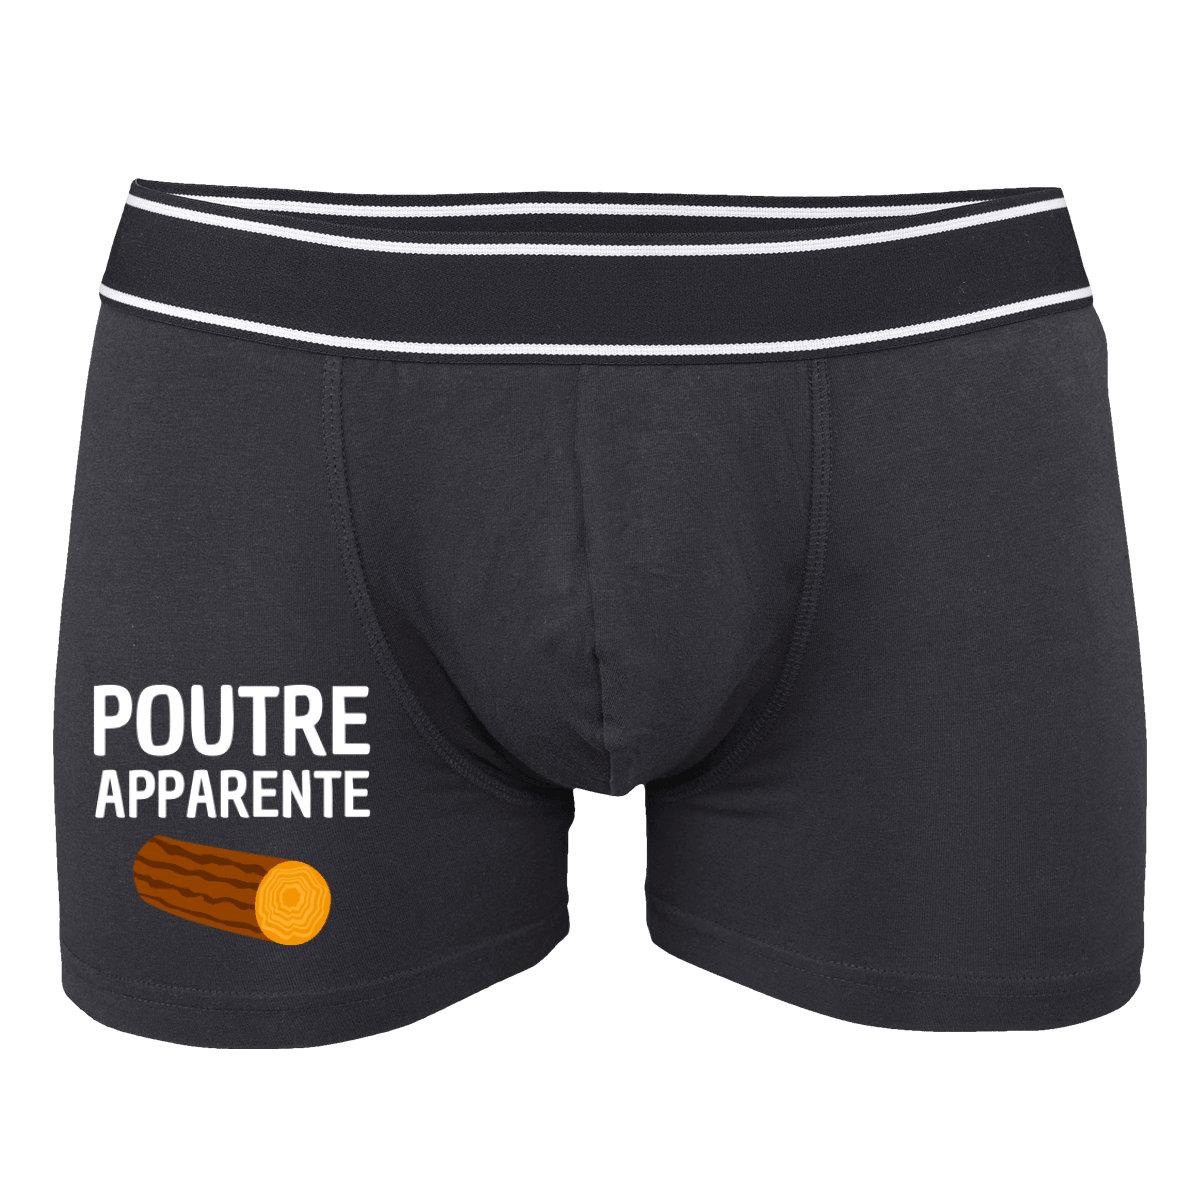 Caleçon "Poutre apparente" - French Humour